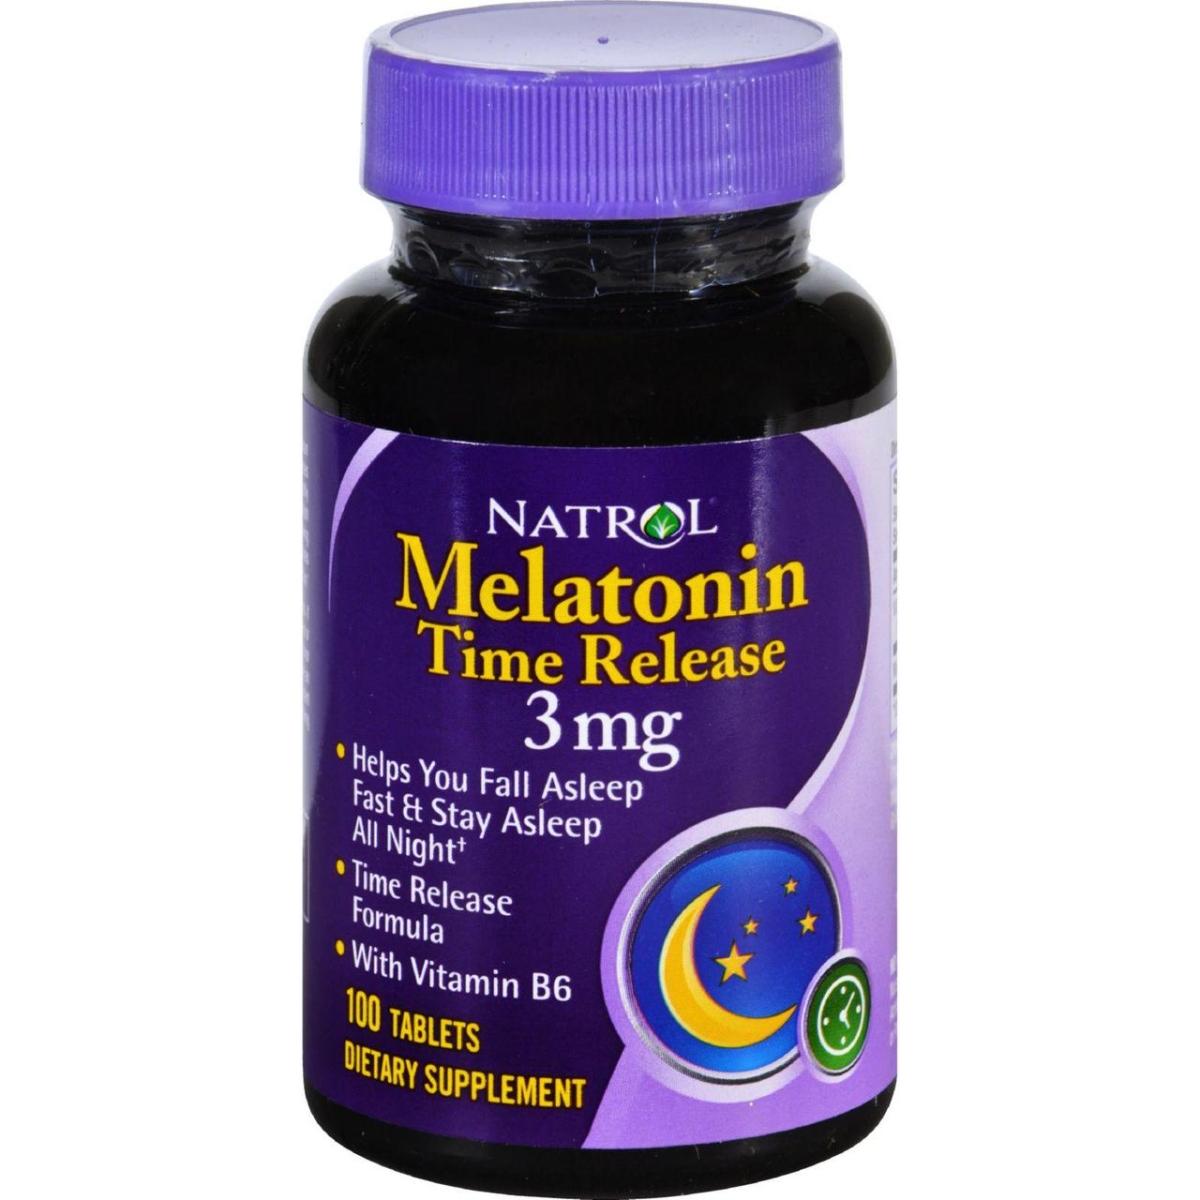 Hg0937193 3 Mg Melatonin Time Release - 100 Tablets